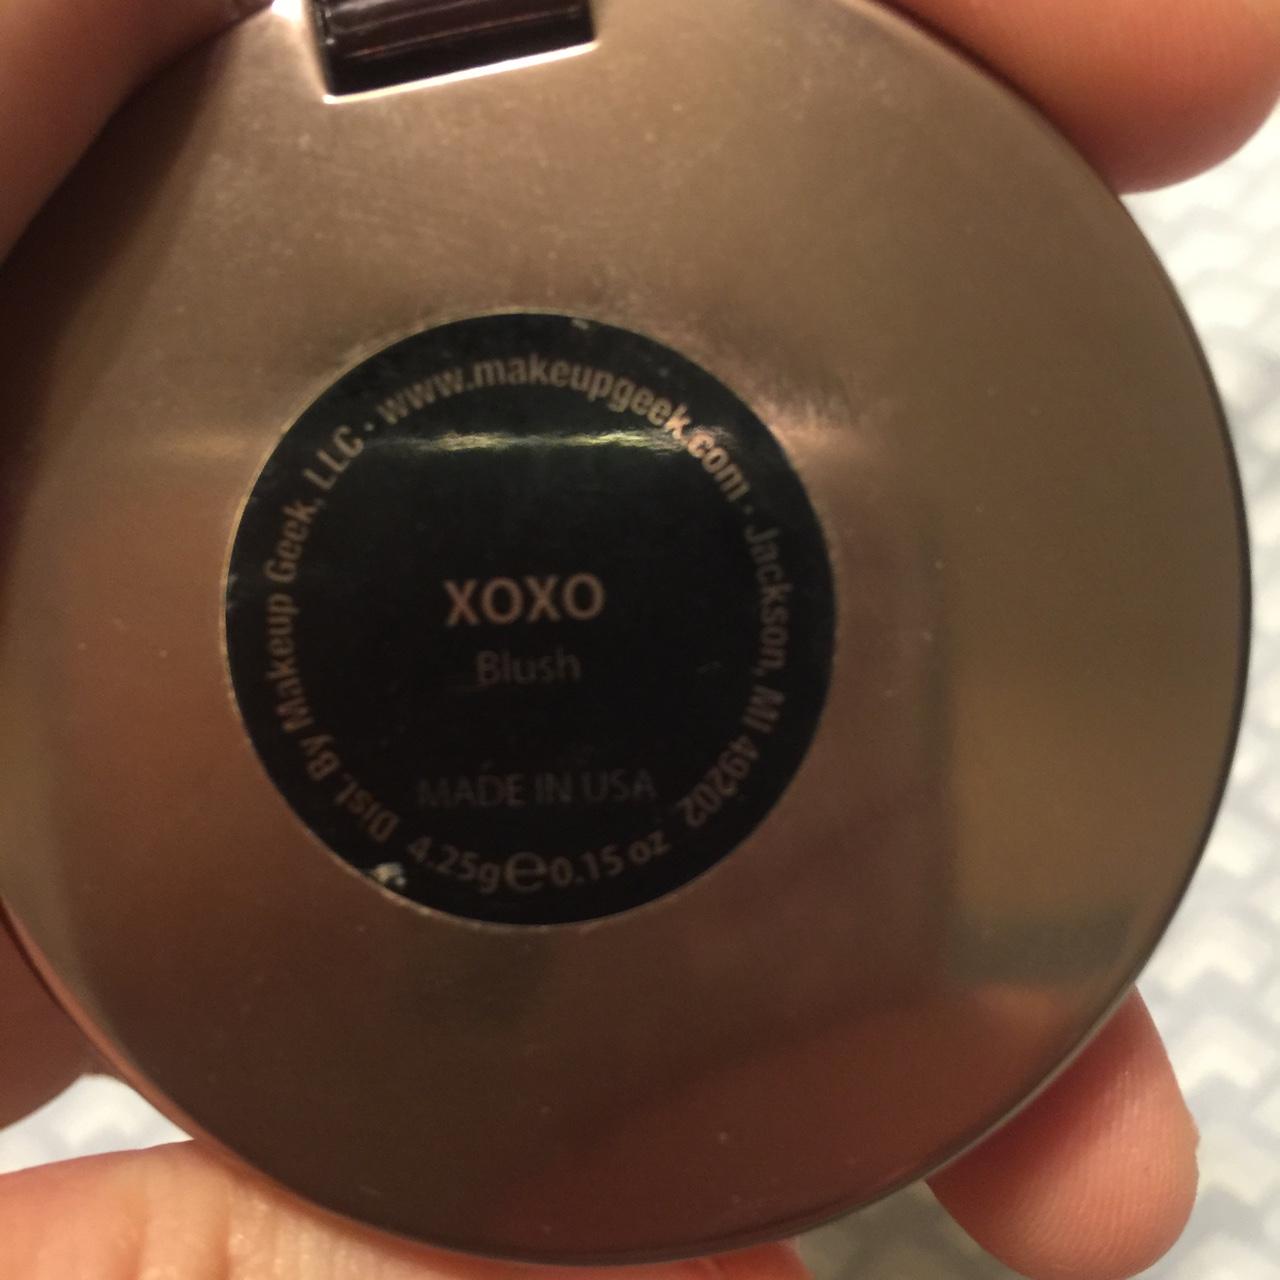 Makeup Geek Blush Compact In Xoxo